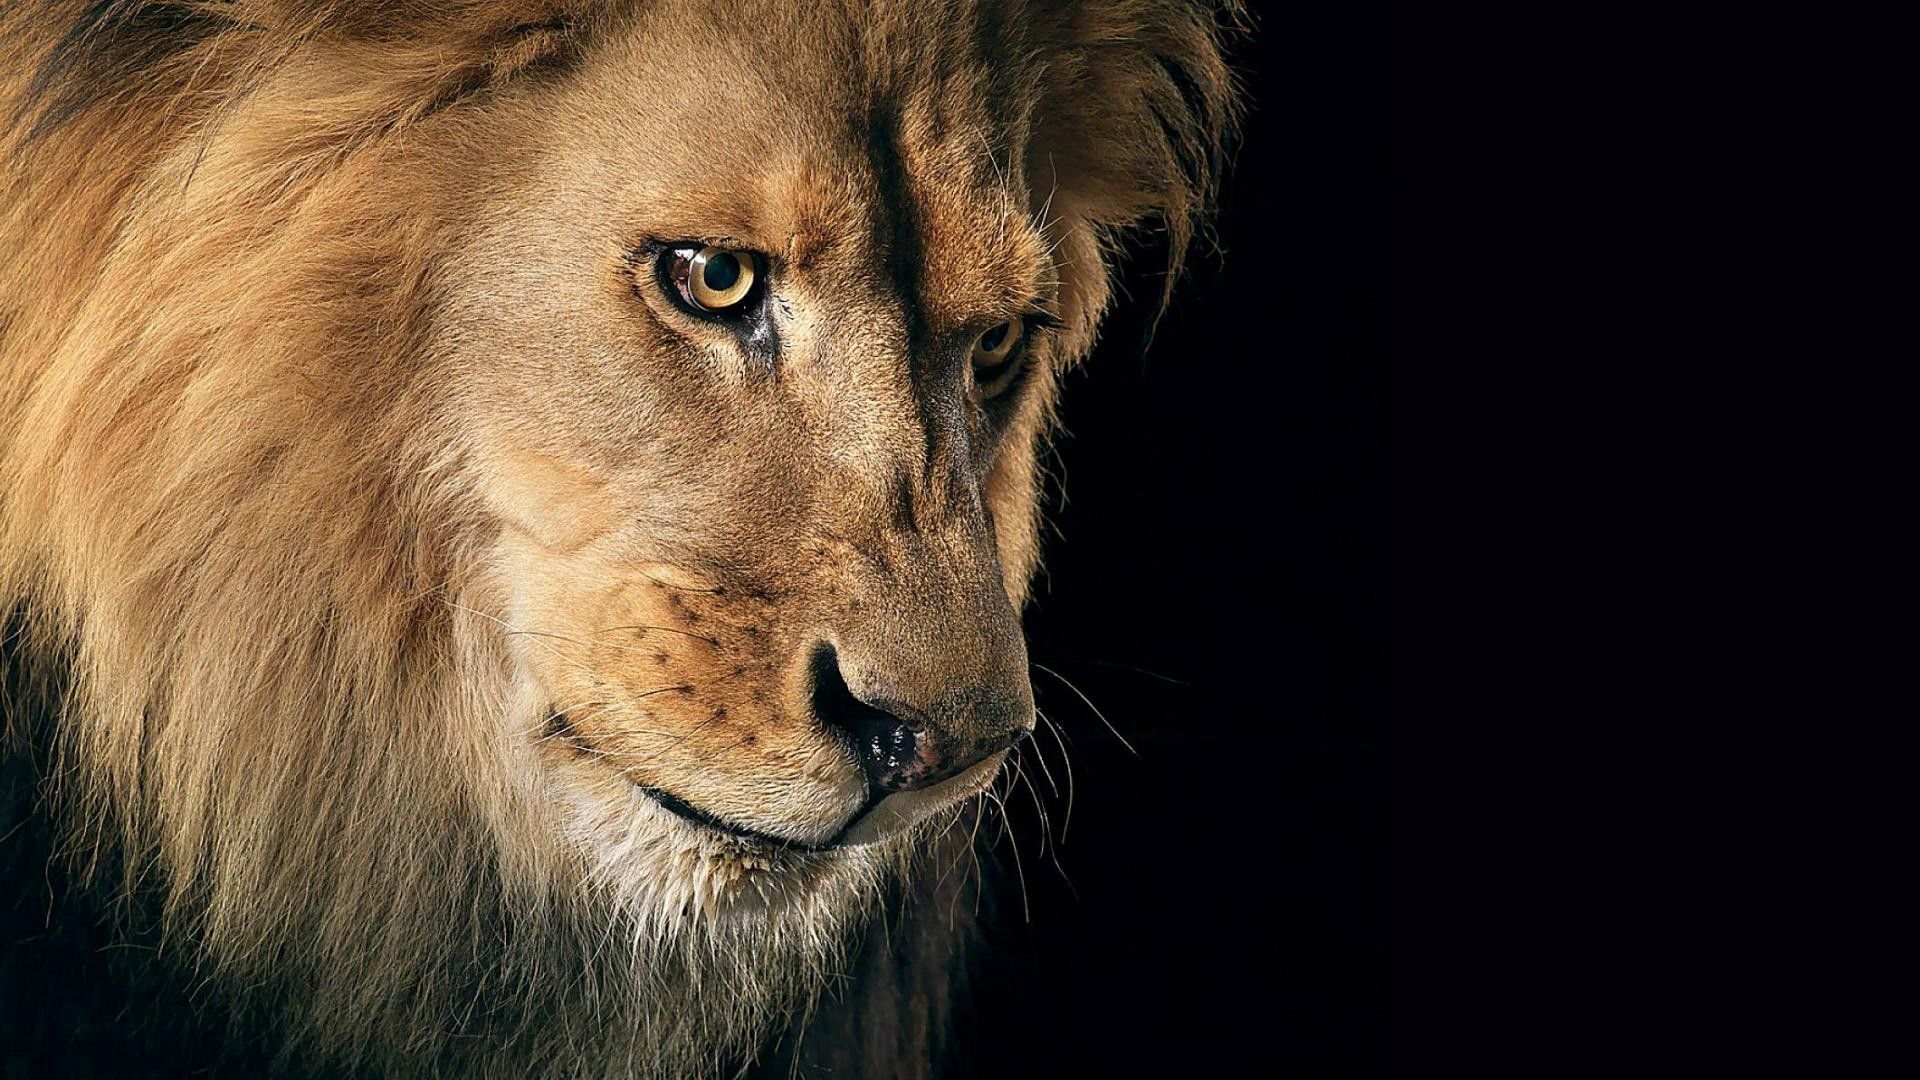 107978 descargar imagen animales, fondo oscuro, un leon, león, depredador, melena: fondos de pantalla y protectores de pantalla gratis